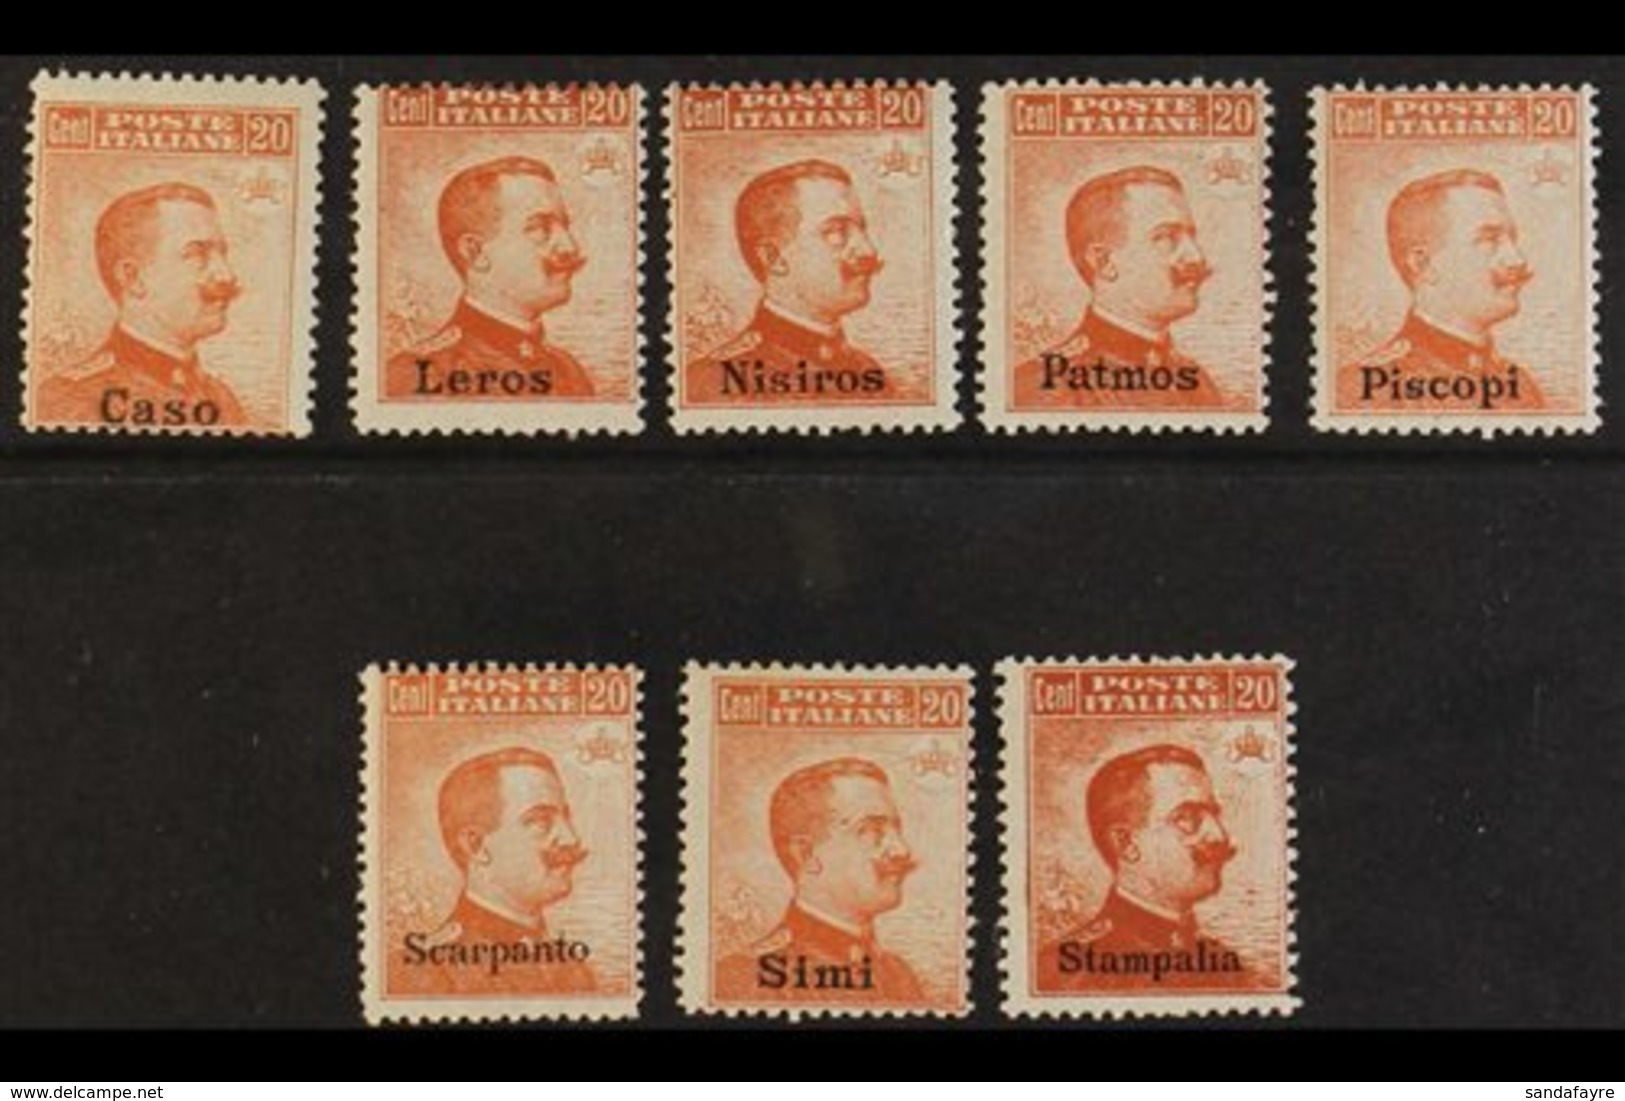 1917 20c Orange, No Watermark Ovptd Issues From Caso, Leros, Nisiros, Patmos, Piscopi, Scarpanto, Simi & Stampalia, Sass - Aegean